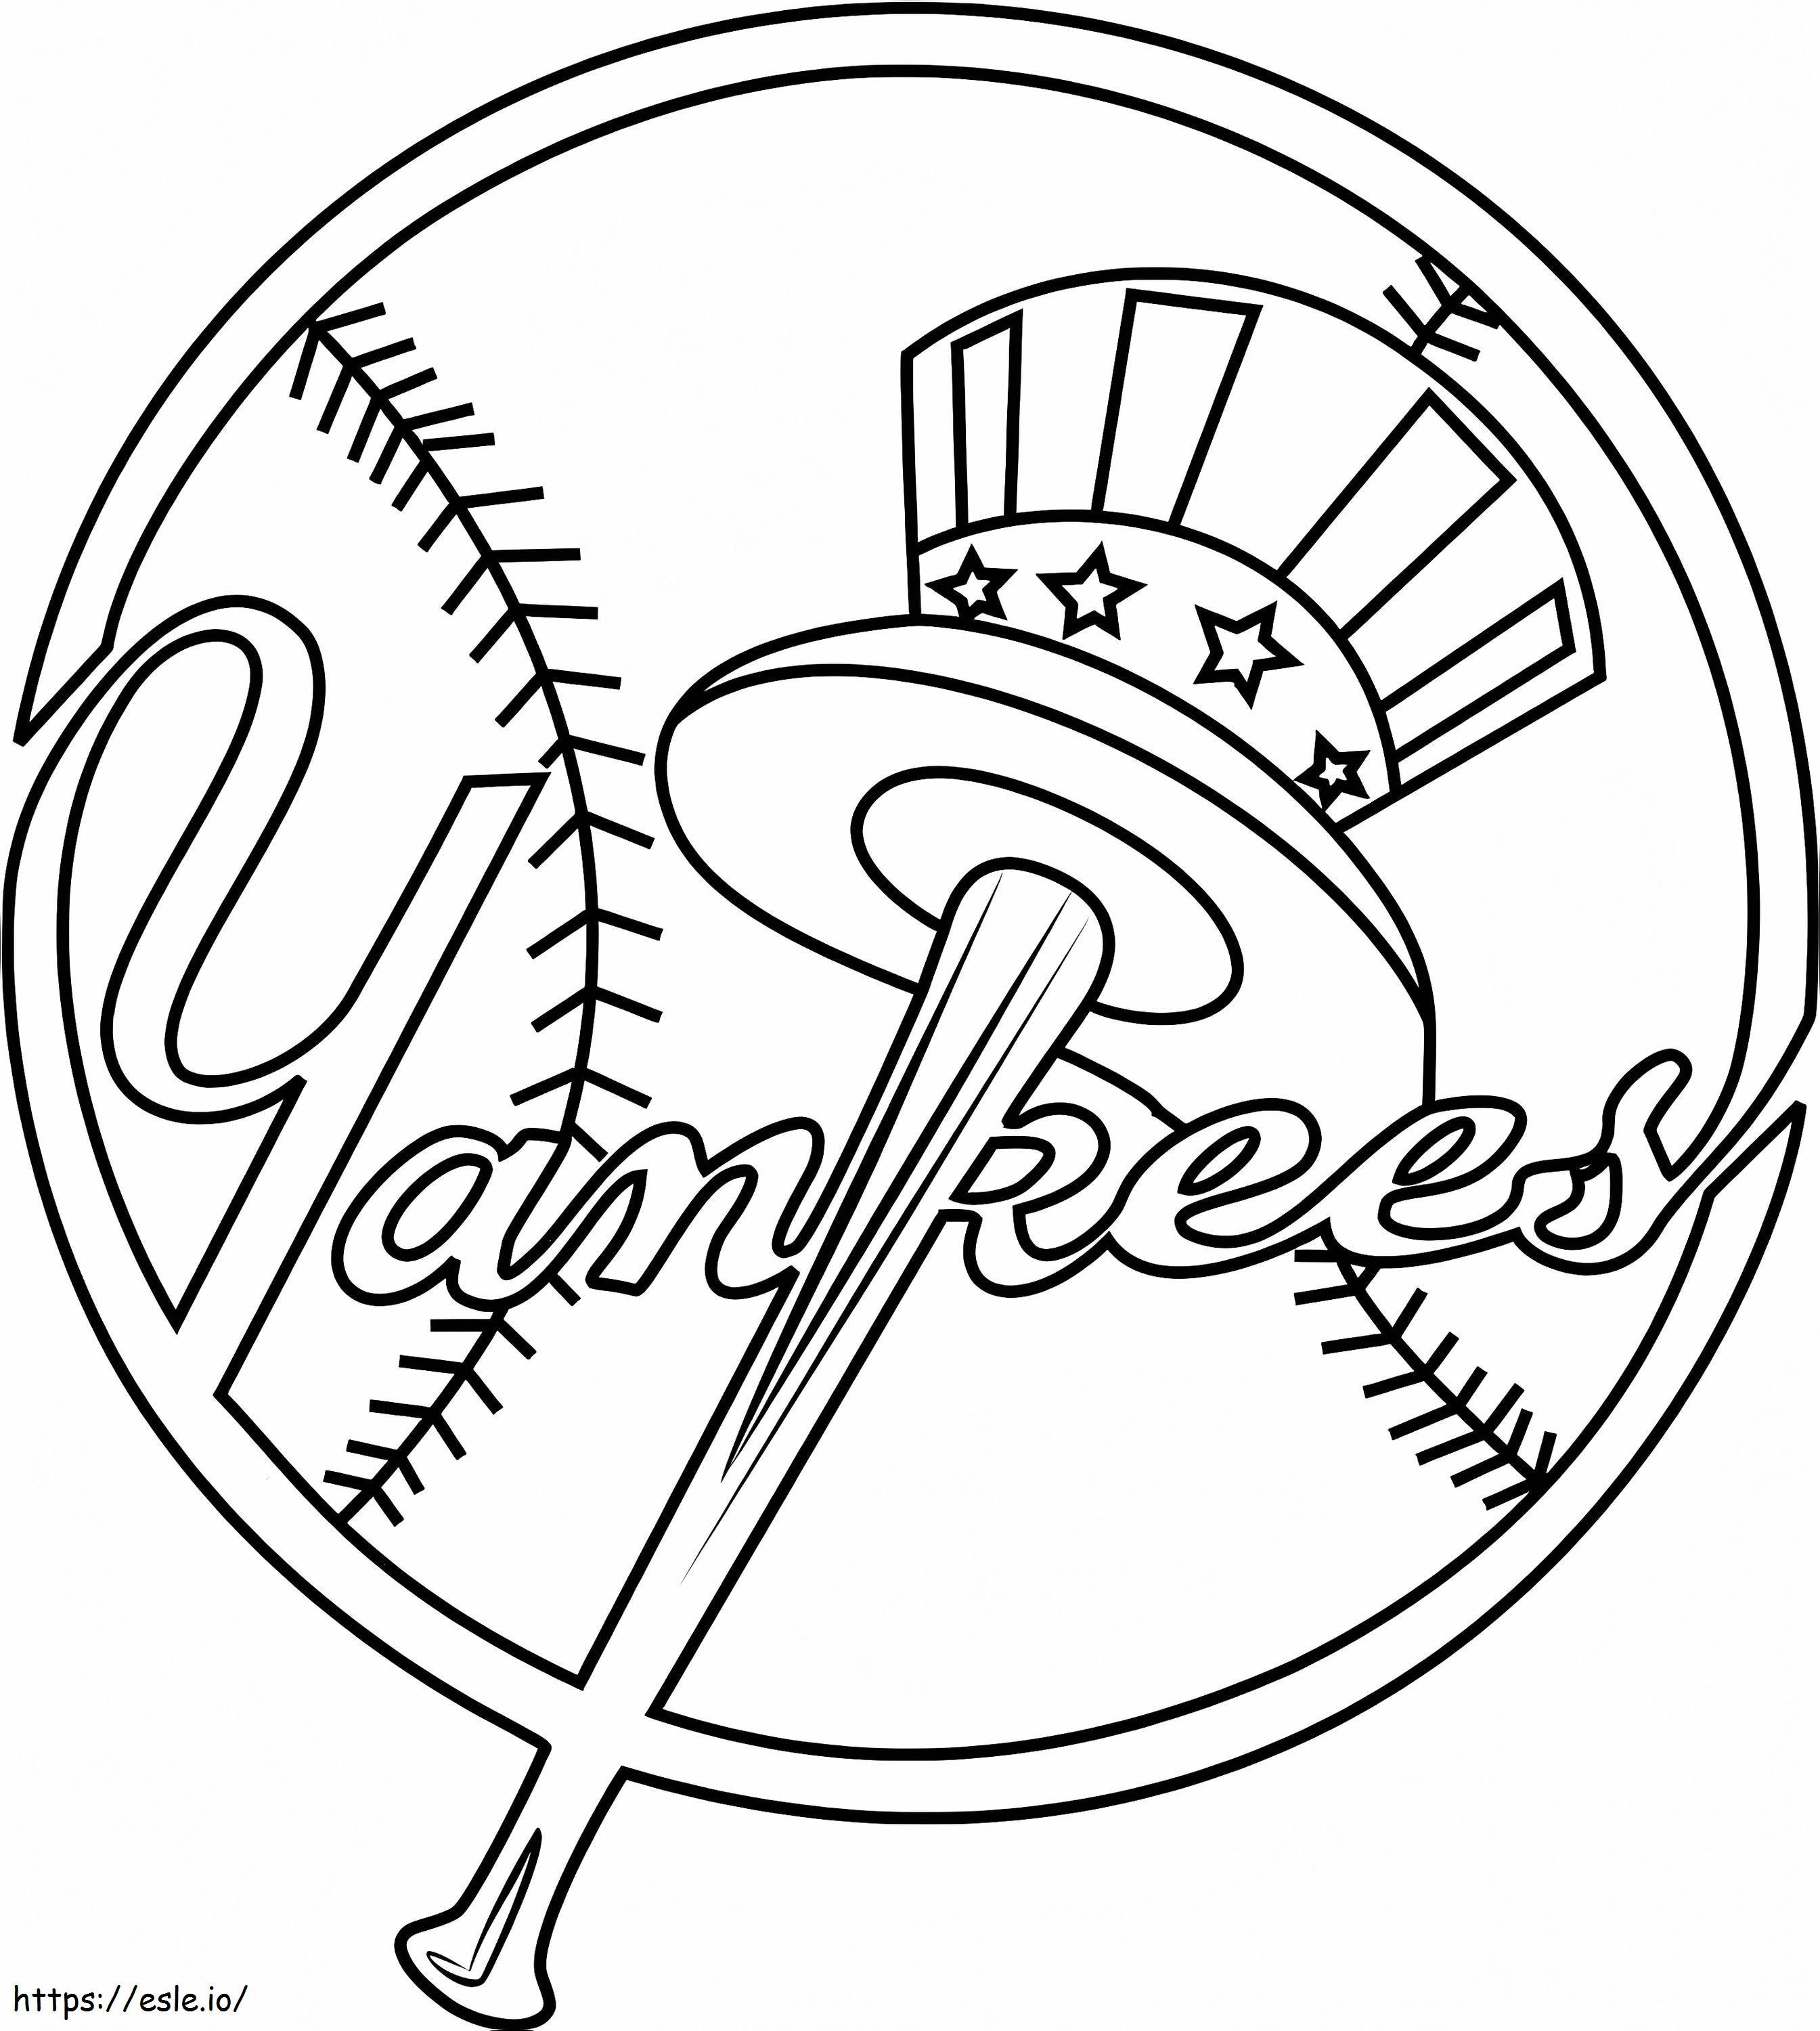 New York Yankees-logo kleurplaat kleurplaat